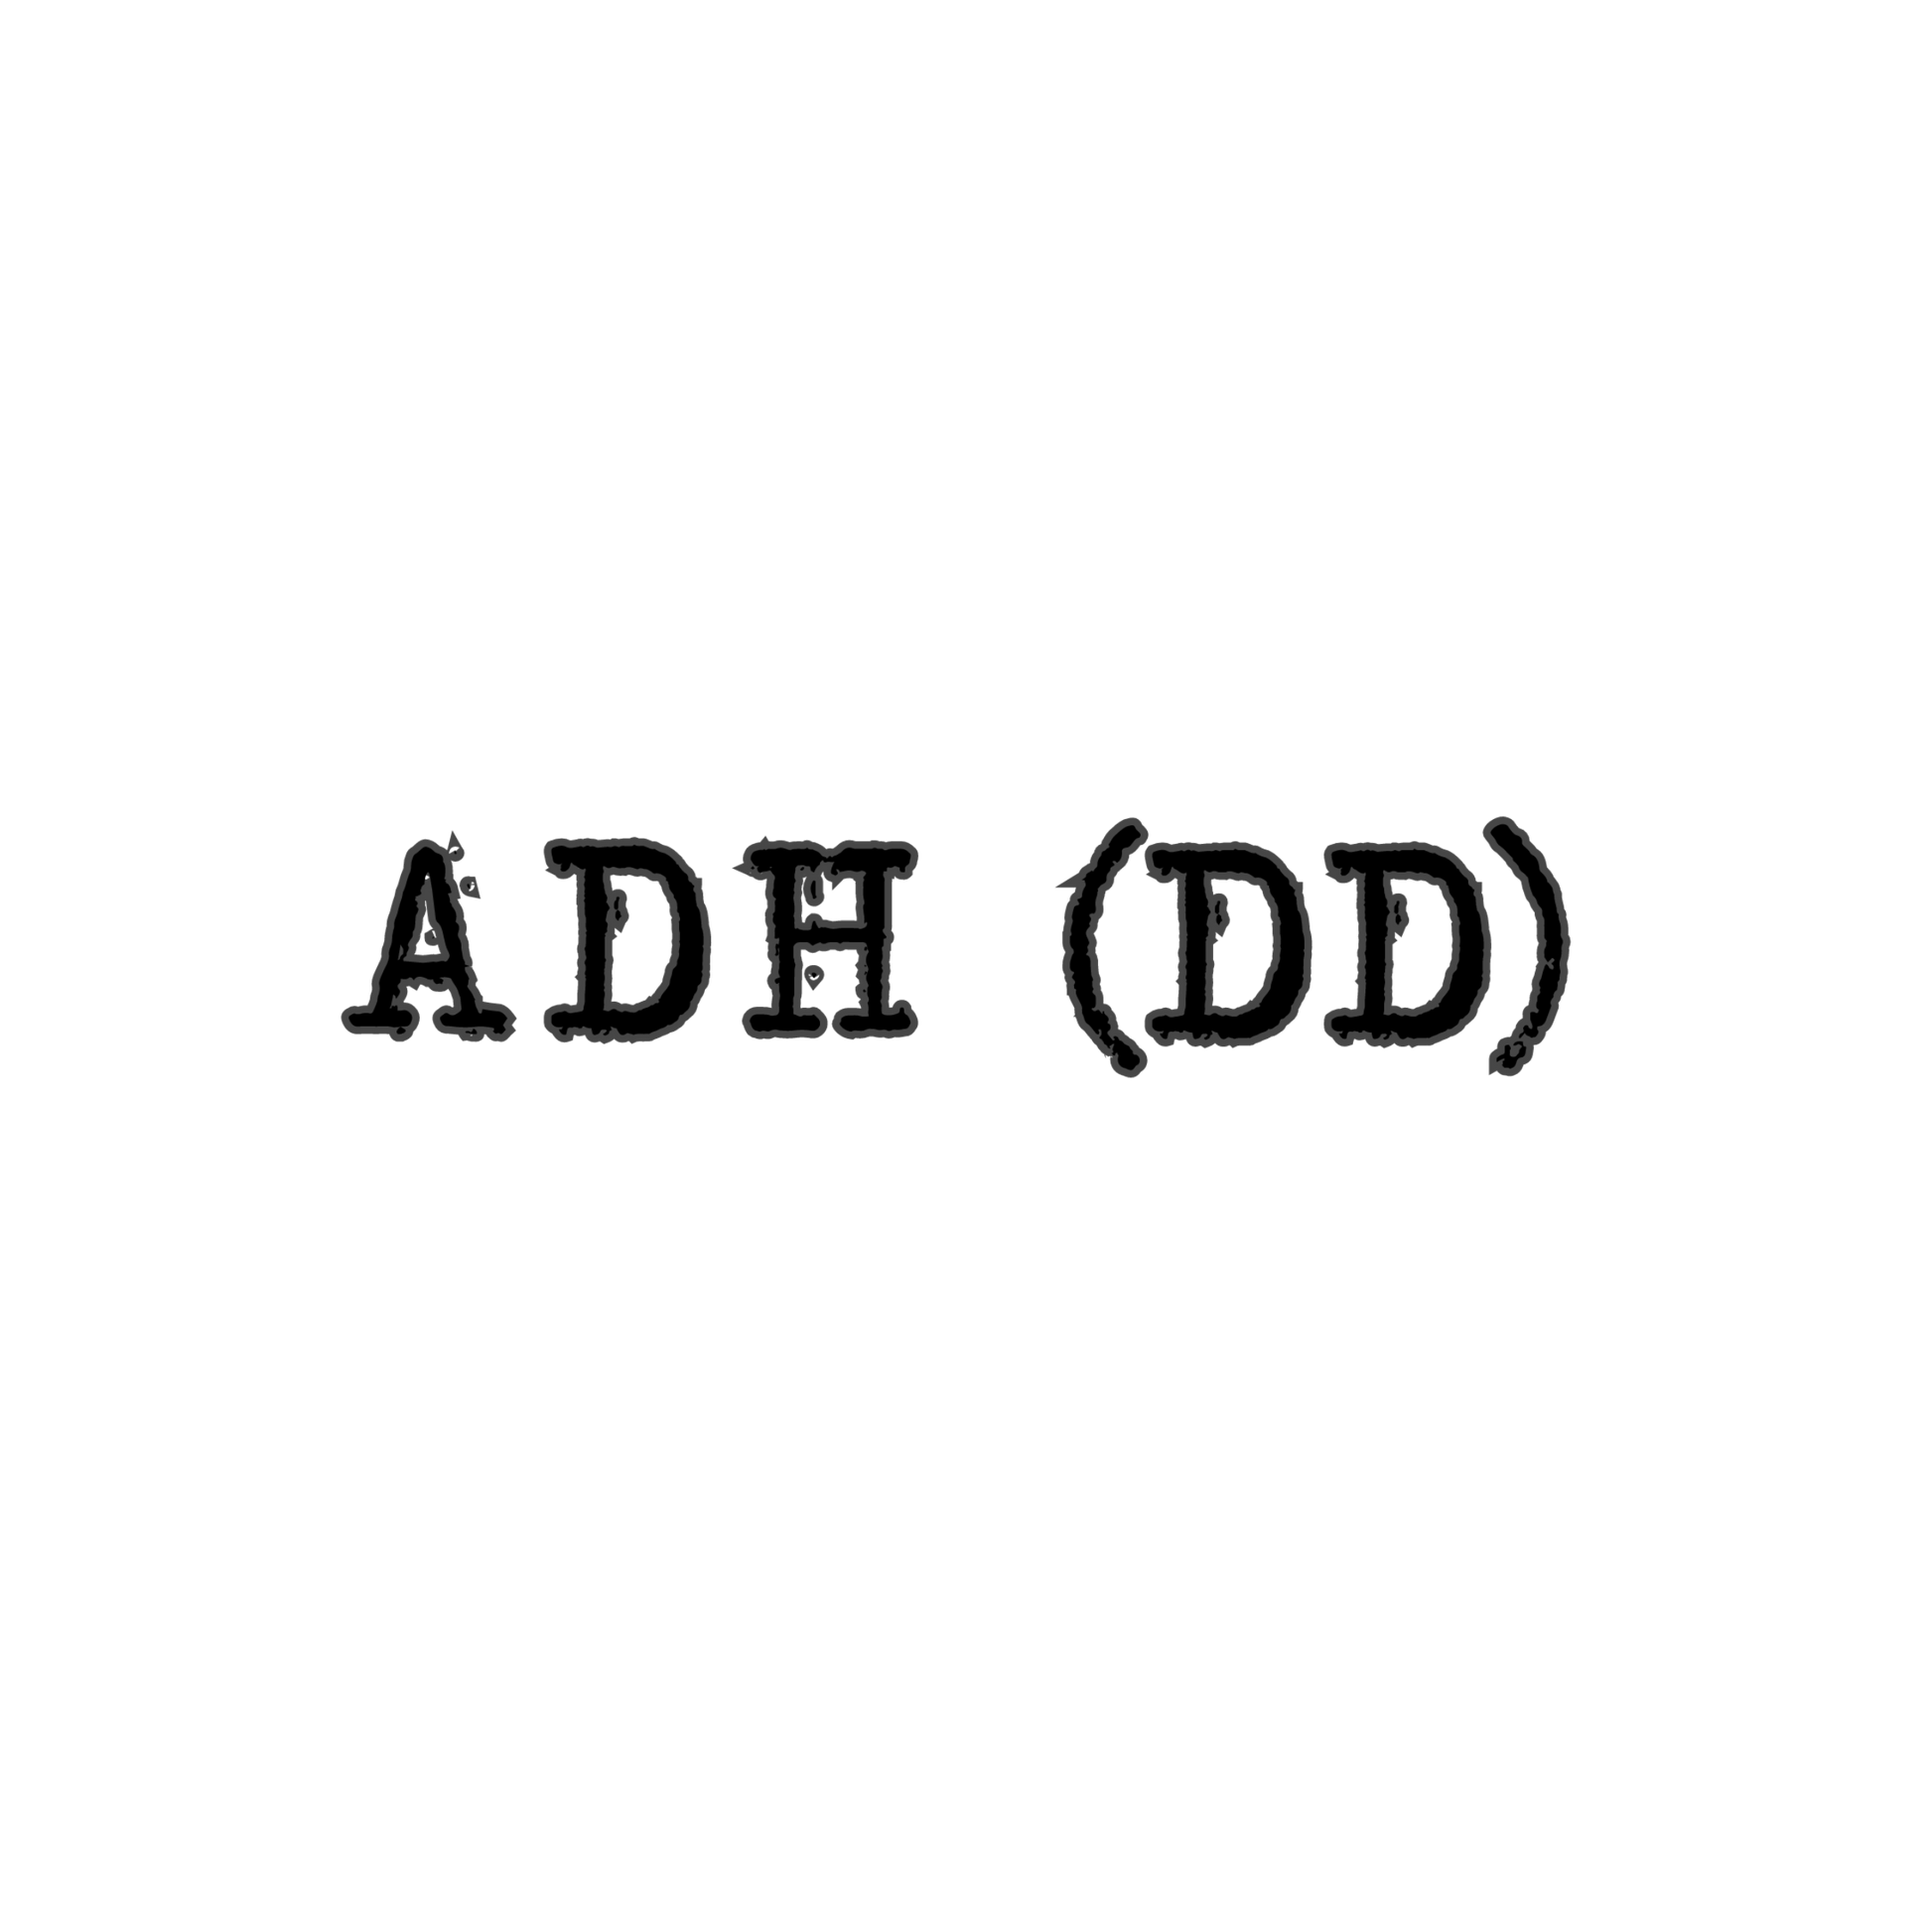 adh(dd) graphic design - gaslit apparel